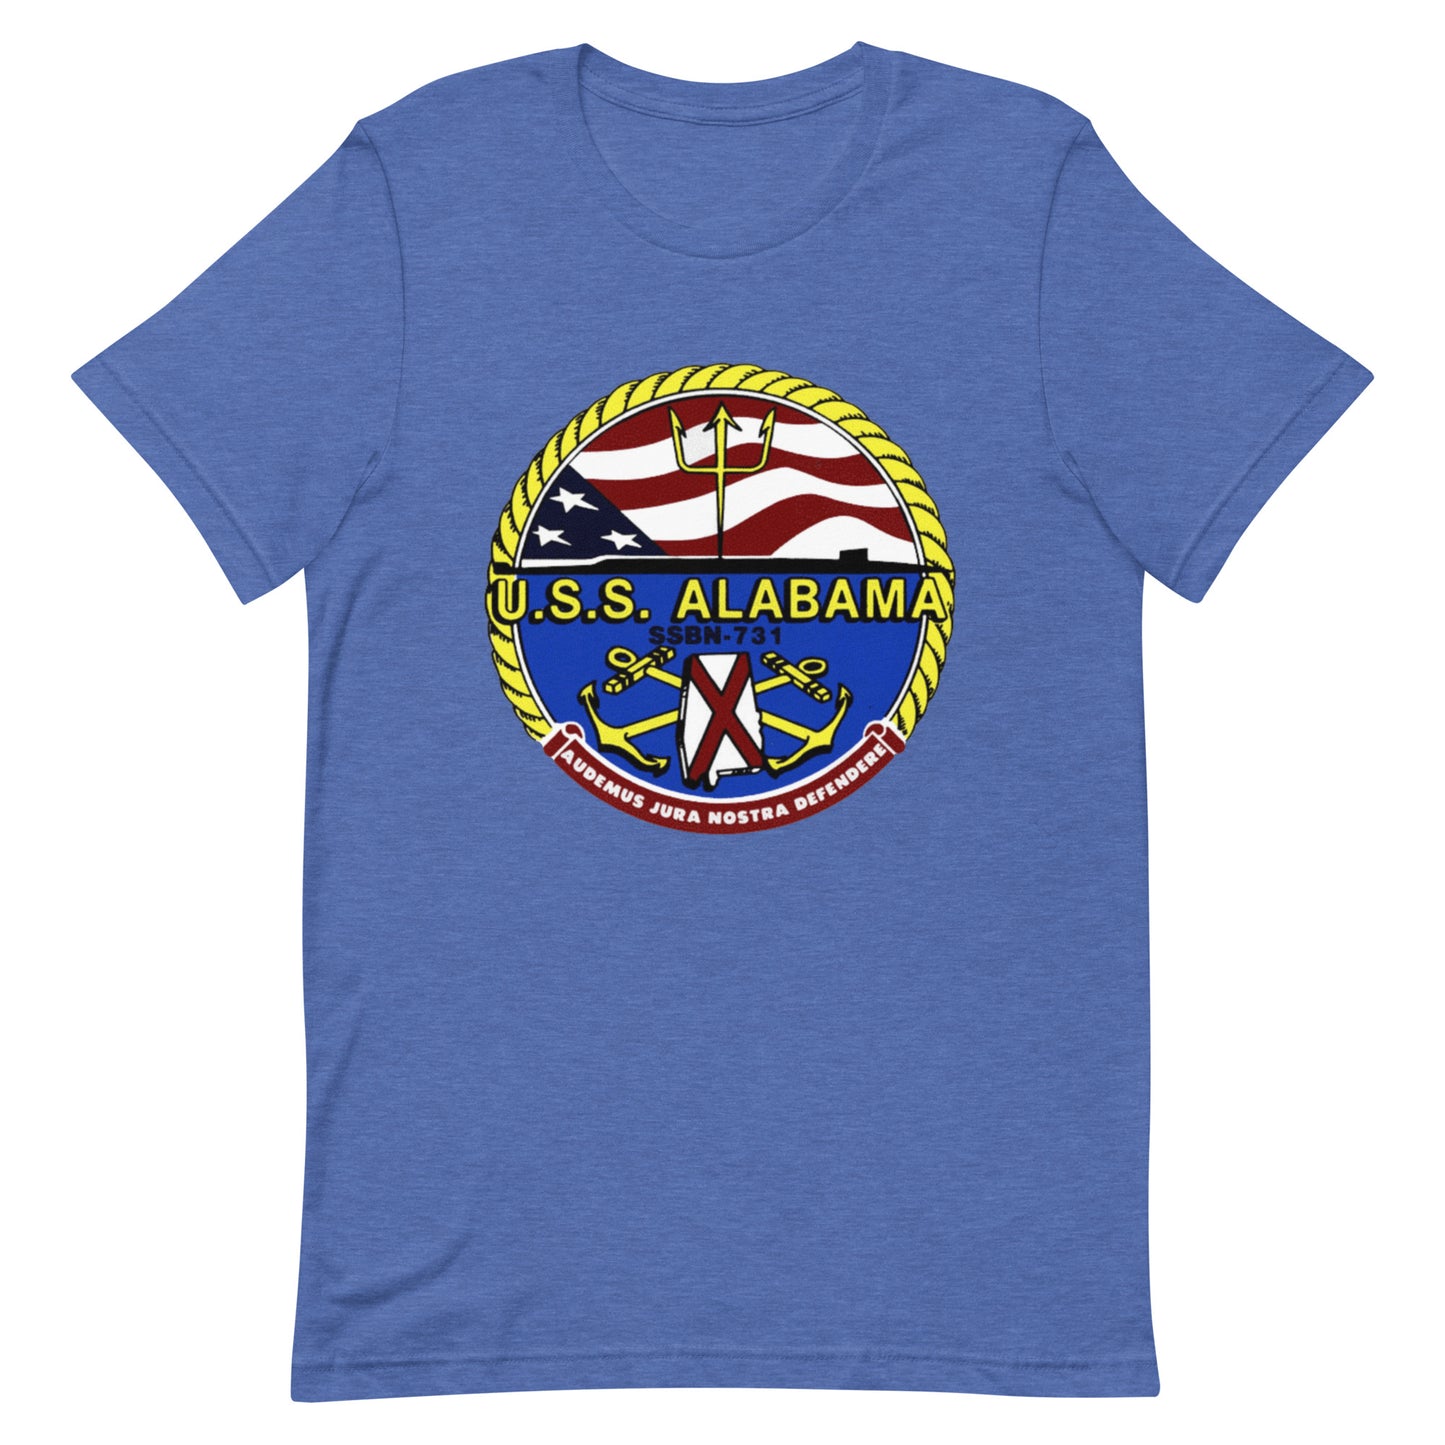 U.S.S. Alabama NAVY Tribute Series T-Shirt